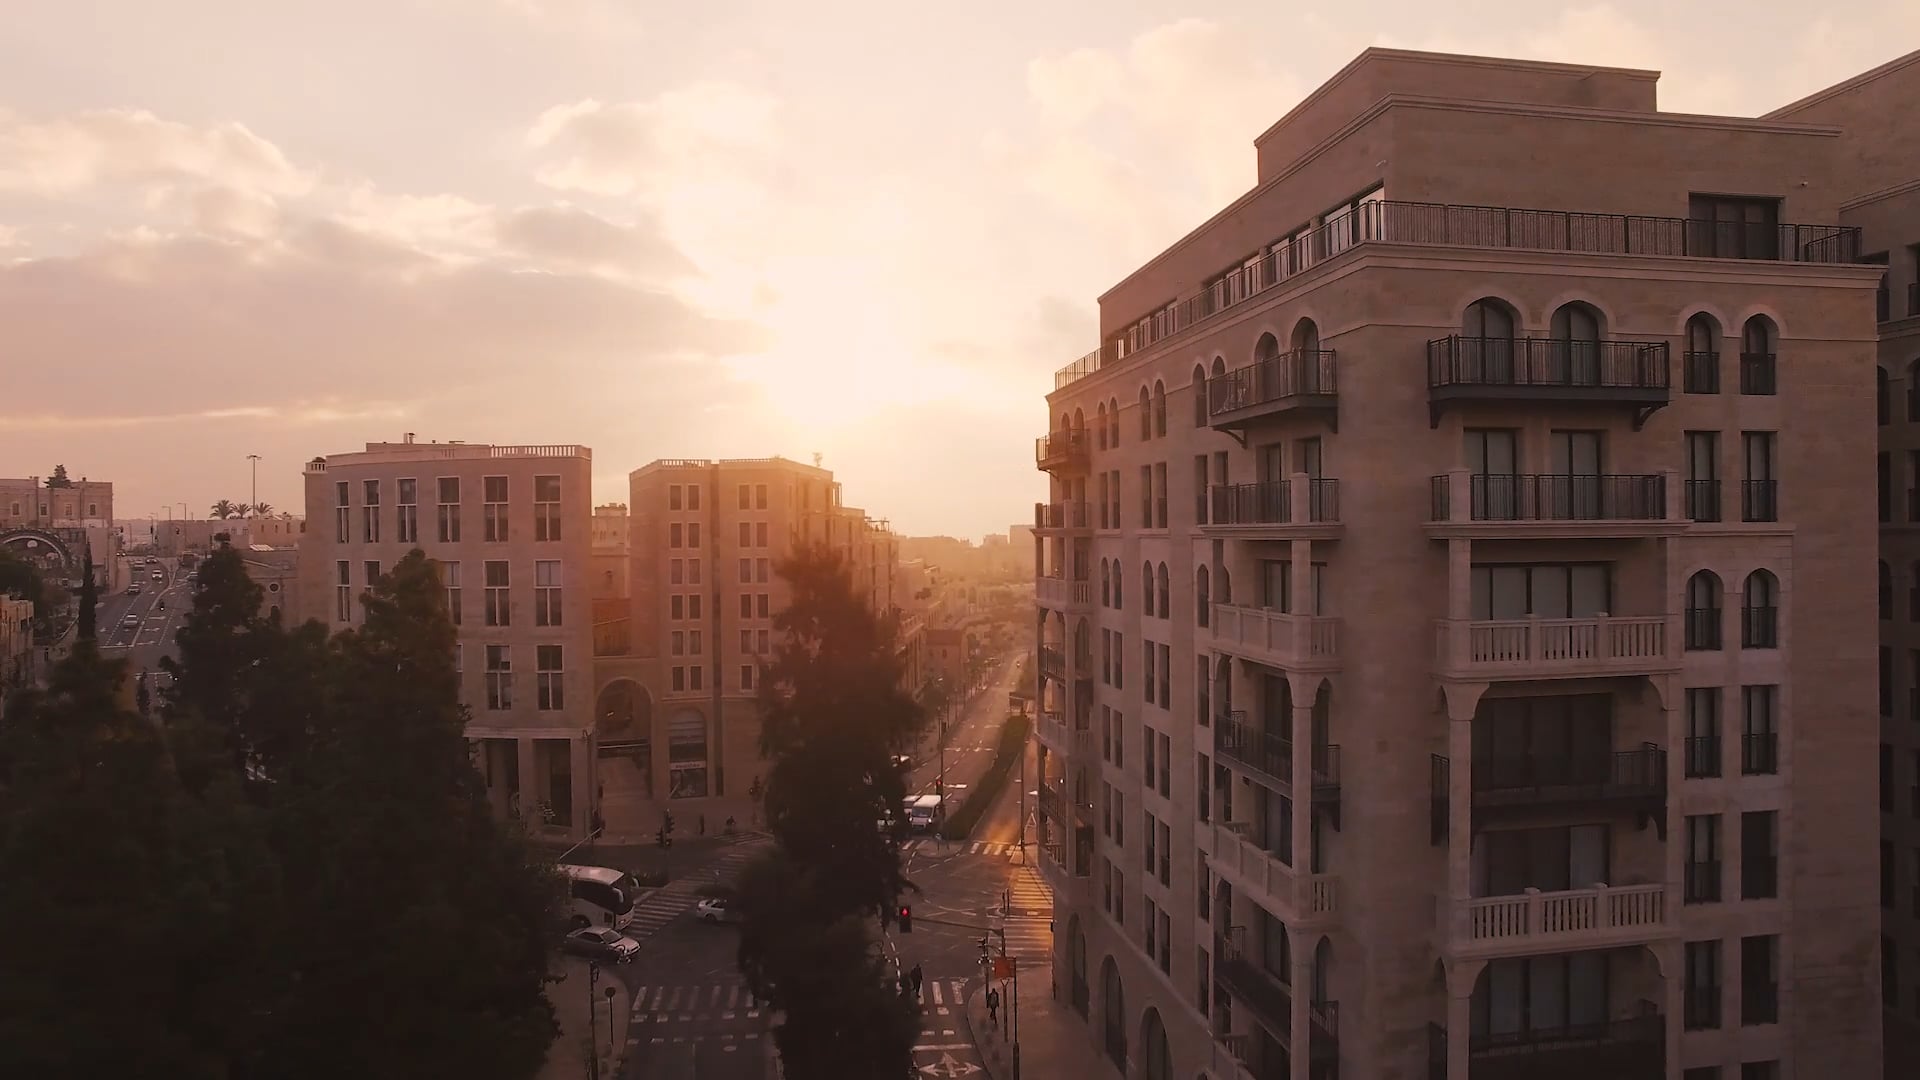 THE WALDORF JERUSALEM - a travel & luxury image film